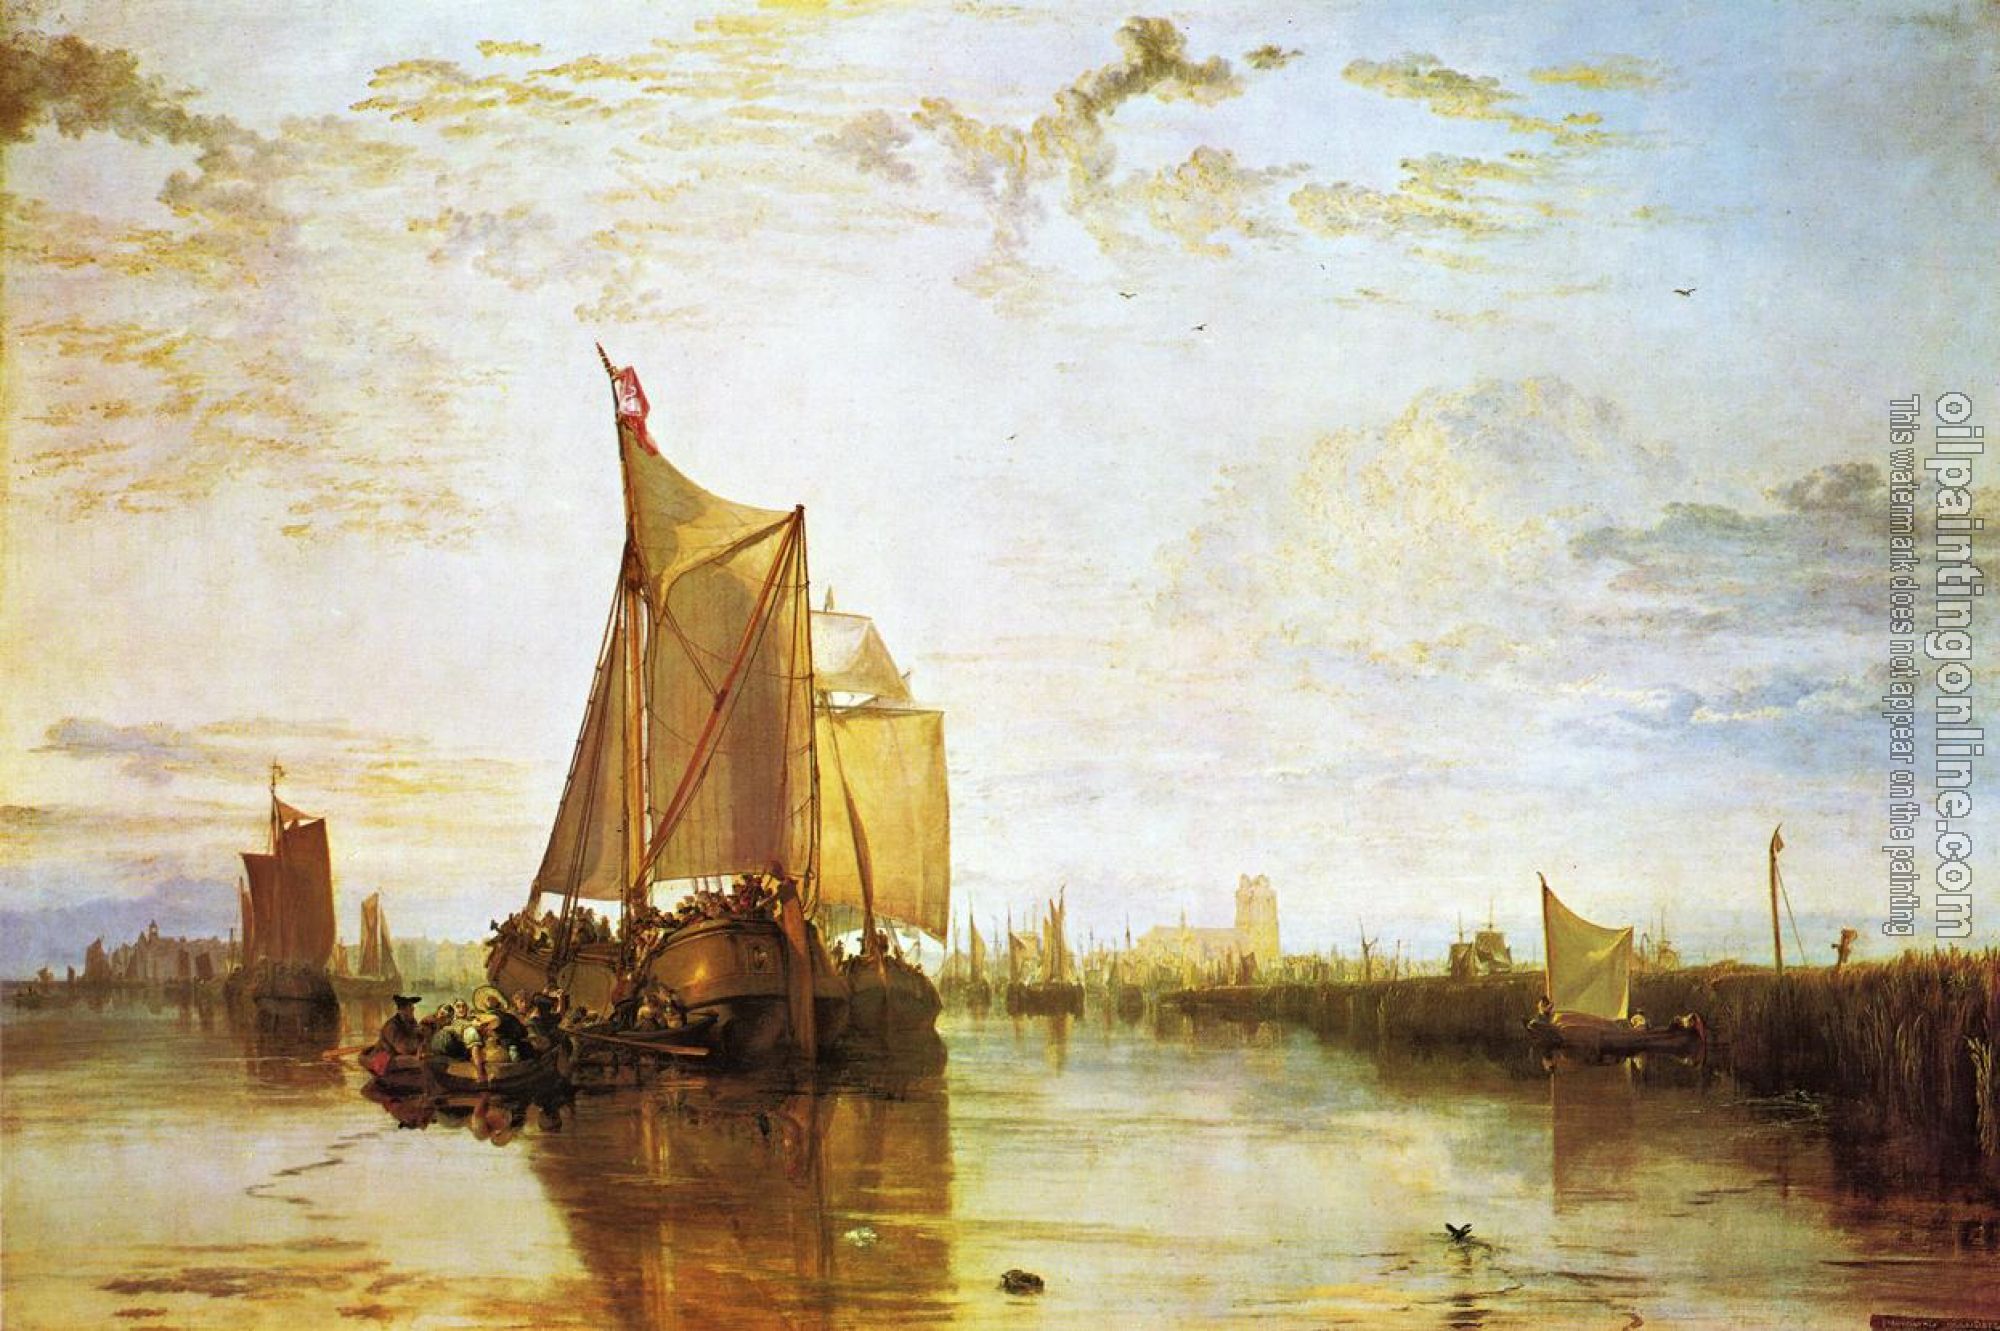 Turner, Joseph Mallord William - Dort, the Dort Packet-Boat from Rotterdam Bacalmed